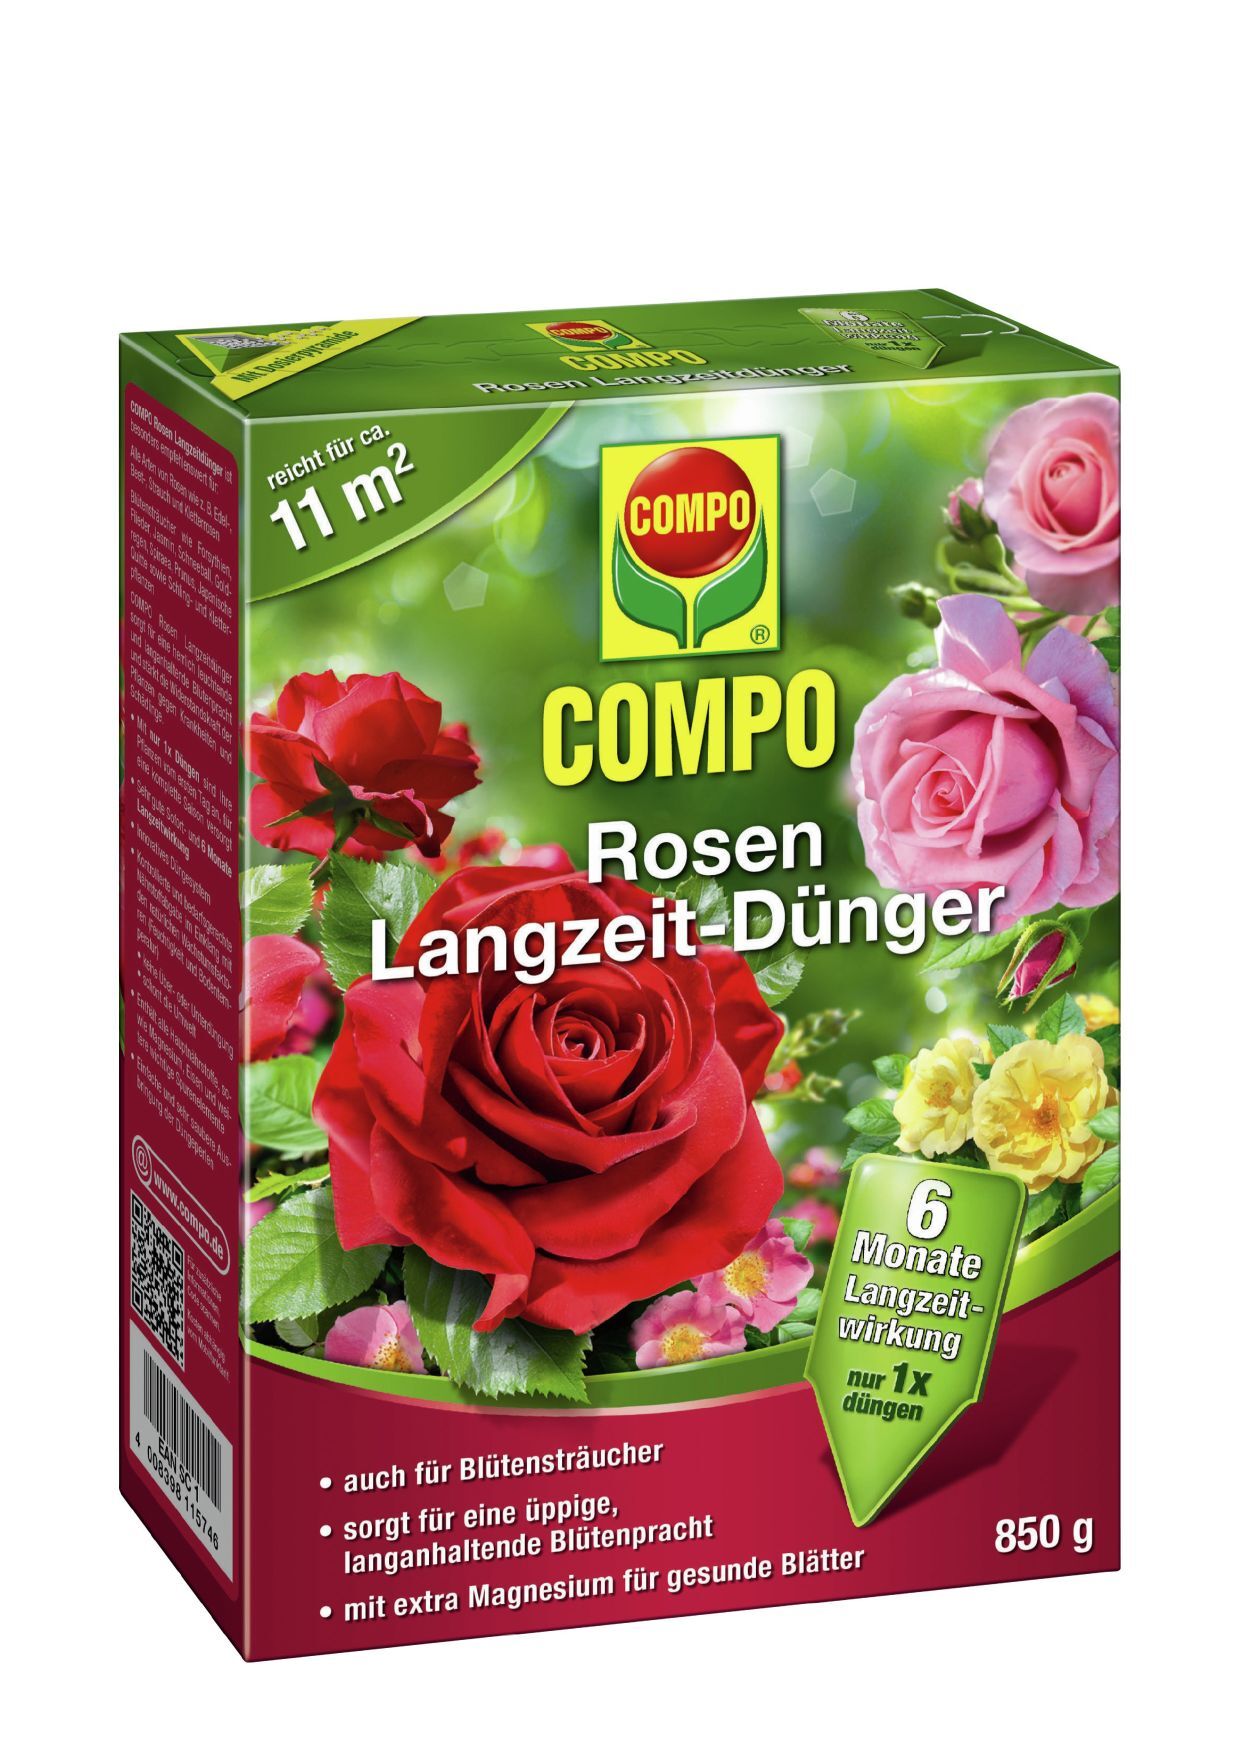 Compo Rosen Langzeit-Dünger